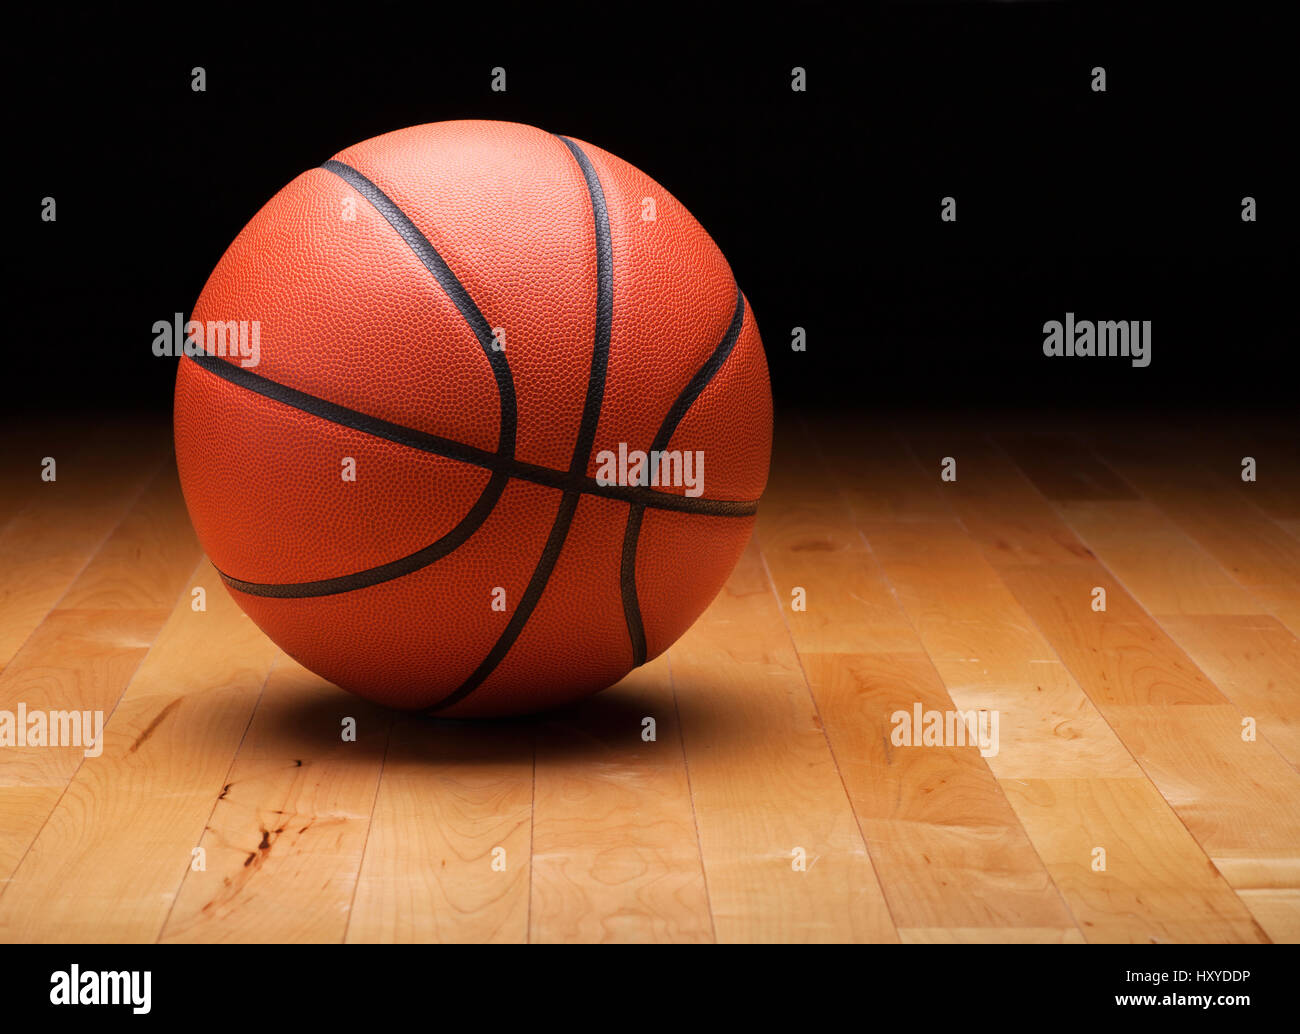 Un baloncesto con un fondo oscuro en un gimnasio de piso de madera Foto de stock